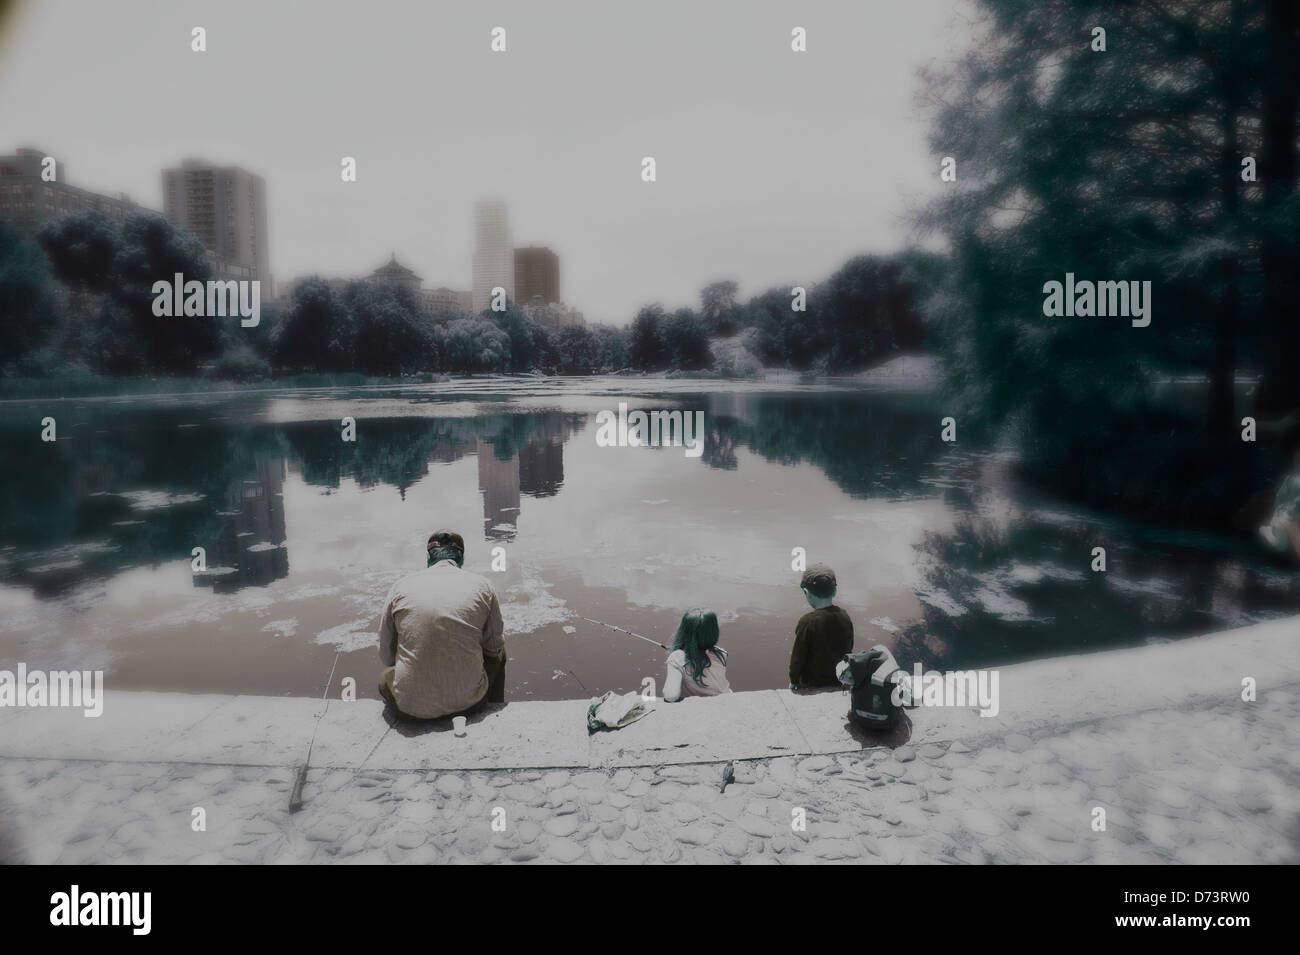 family, landscape, sad, New York, Central Park, water, lake, buildings Stock Photo